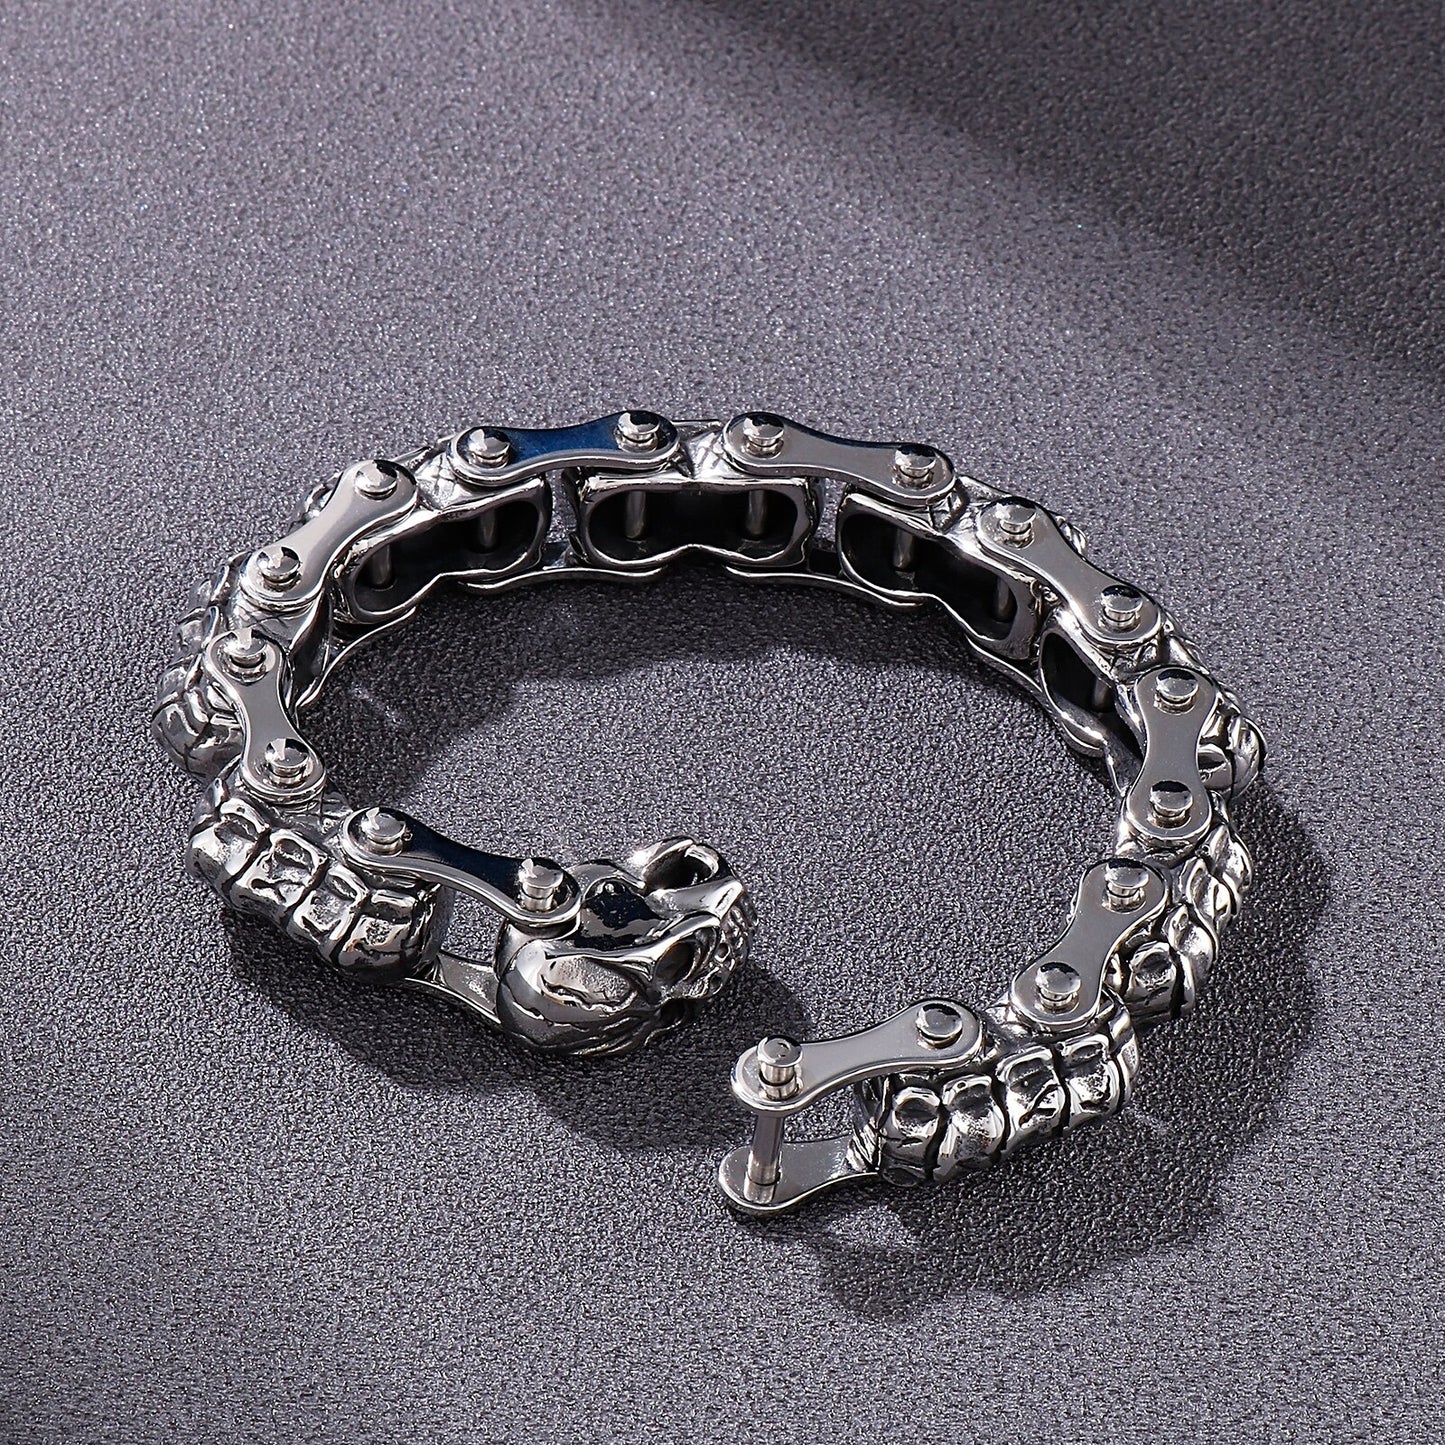 Skull Head Skeleton Charm Gothic Style Men Bracelet Matte Blacken Stainless Steel Vintage Link Chain Fashion Jewelry